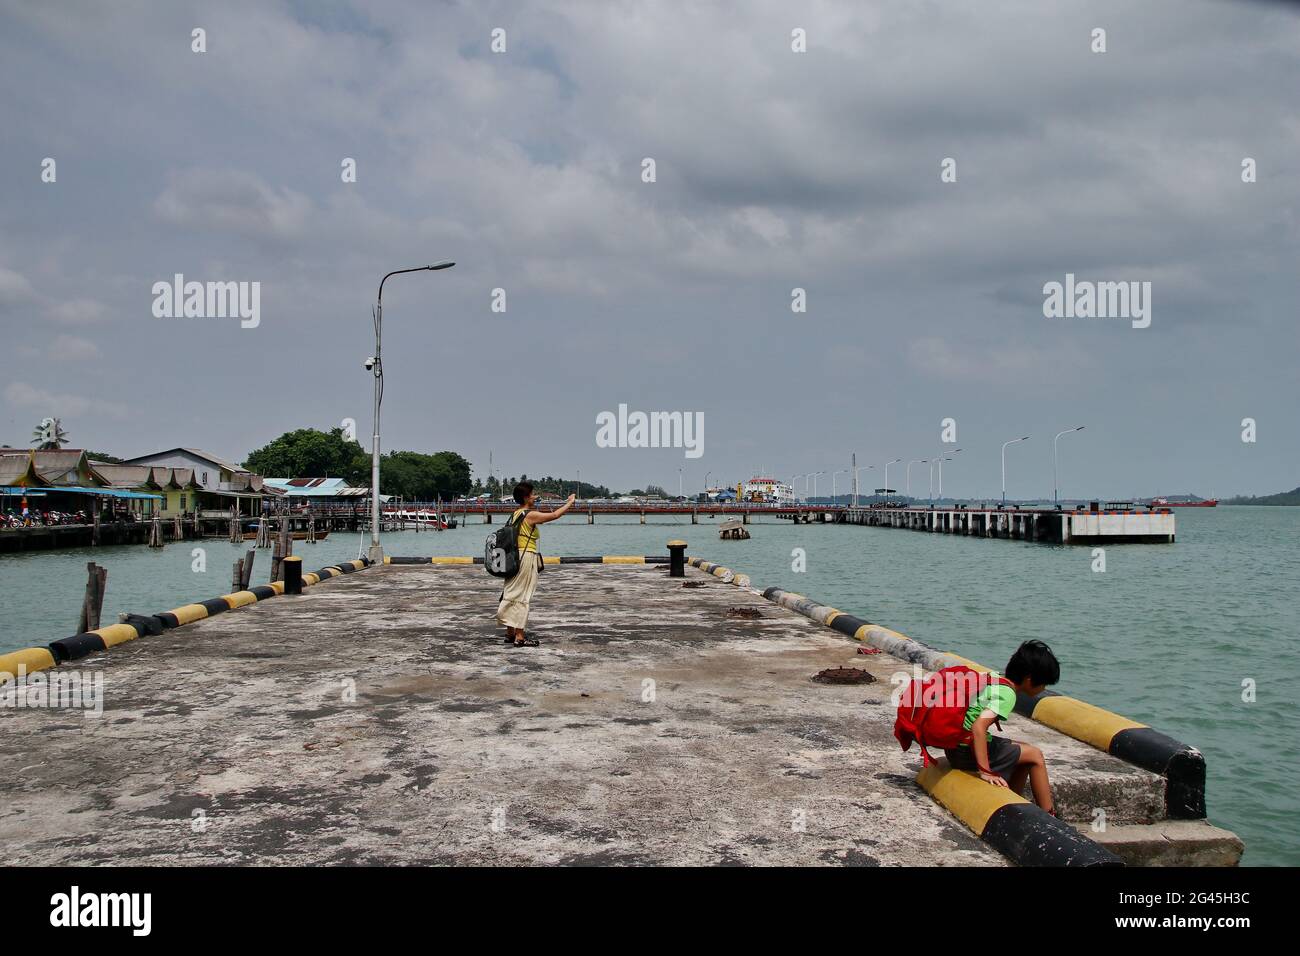 Sri Bintan Pura Port, ferry terminal bridge that carries passengers, Tanjung Pinang, Riau Island, Stock Photo